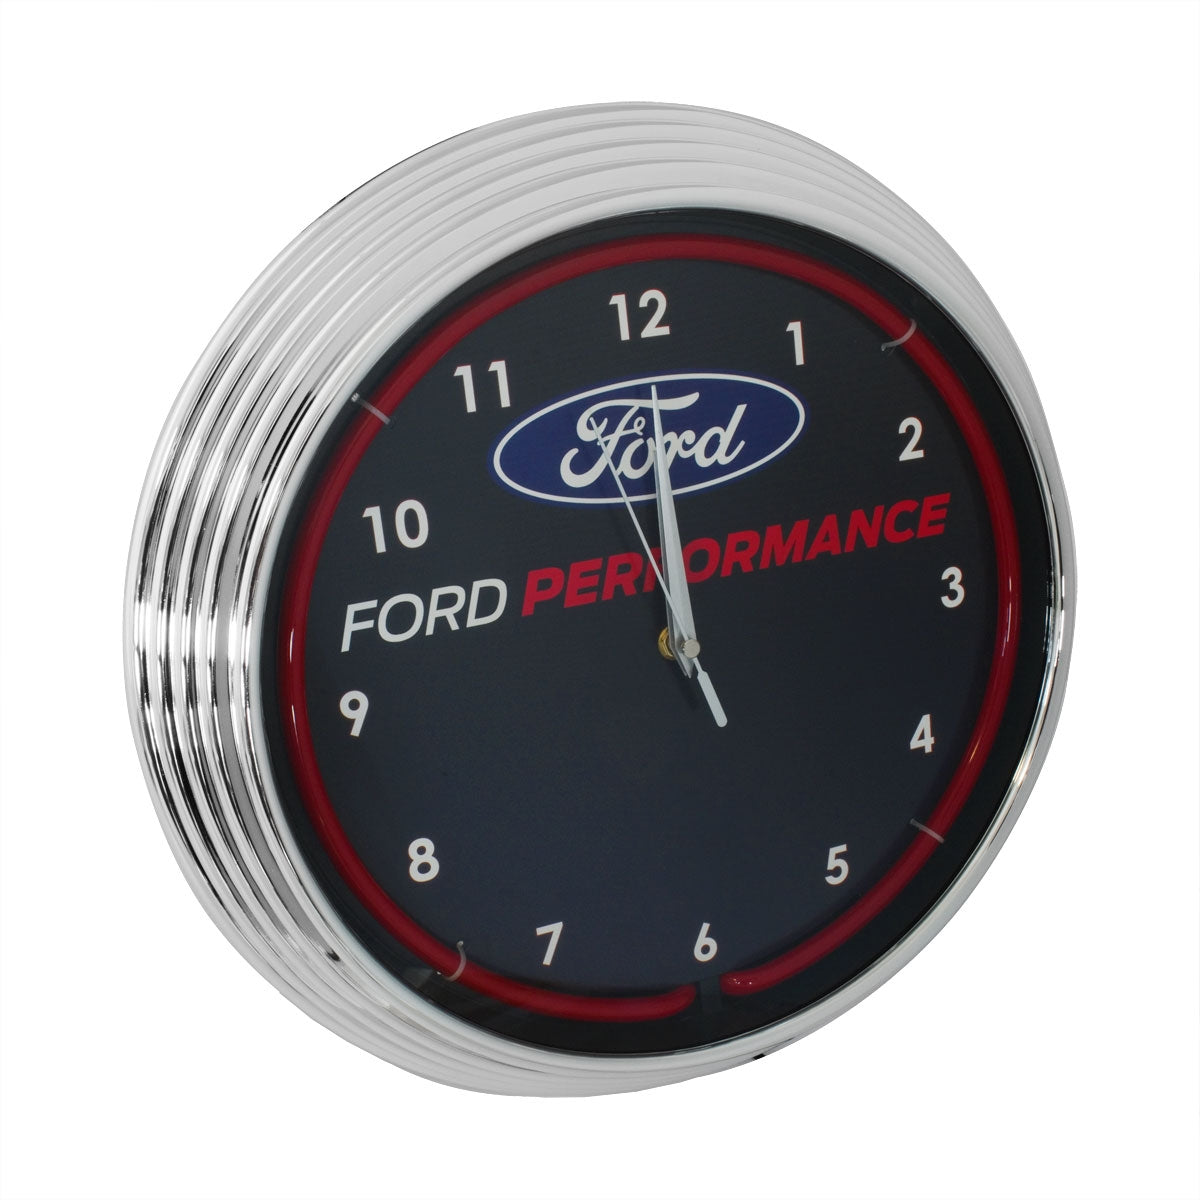 Ford Performance Neon Garage Man Cave Wall Clock Chrome Trim w/ Red Illumination